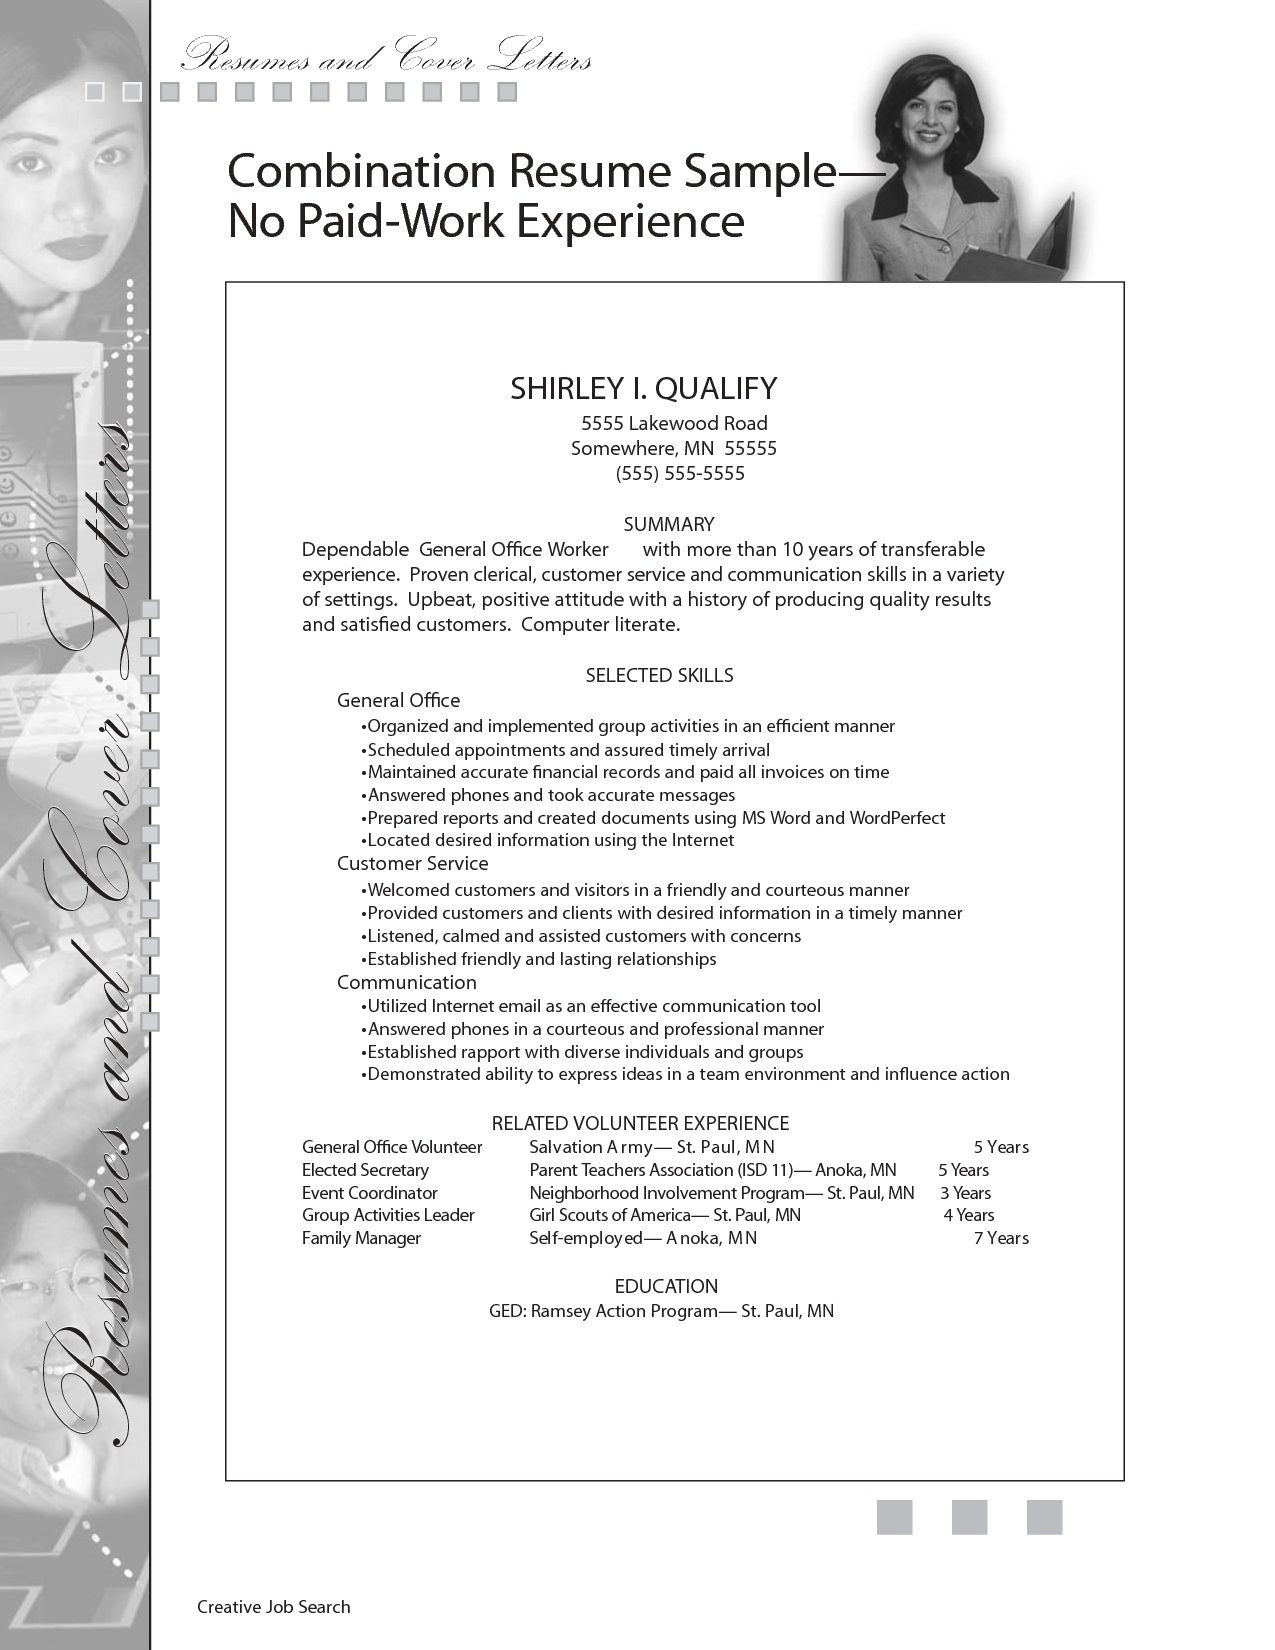 job resume with no work experienceml